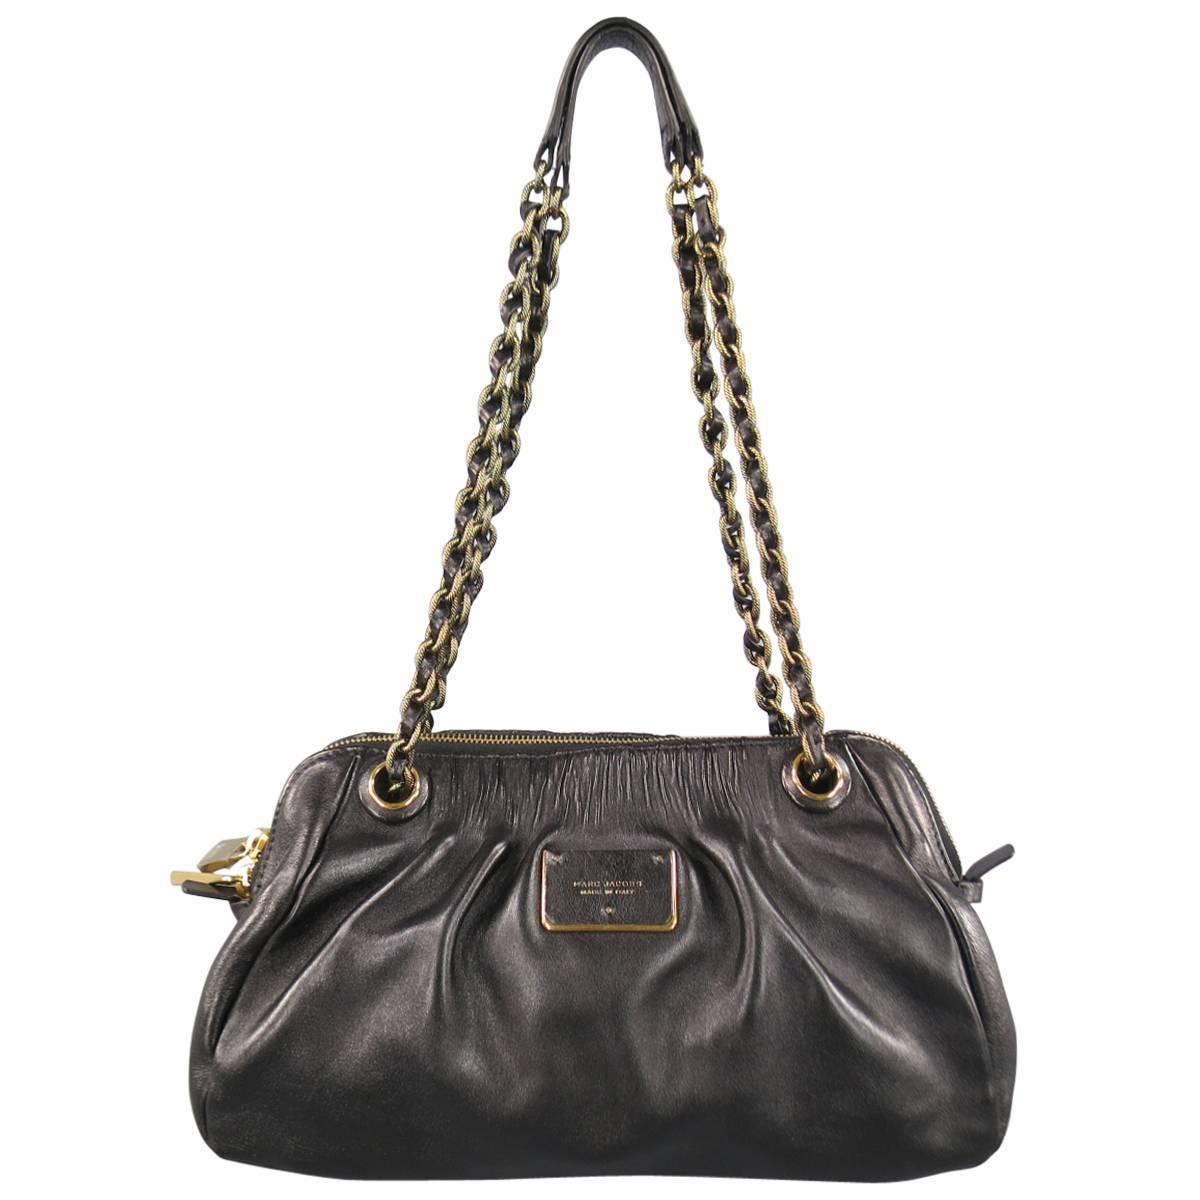 MARC JACOBS Black Gathered Leather Gold Chain Handbag